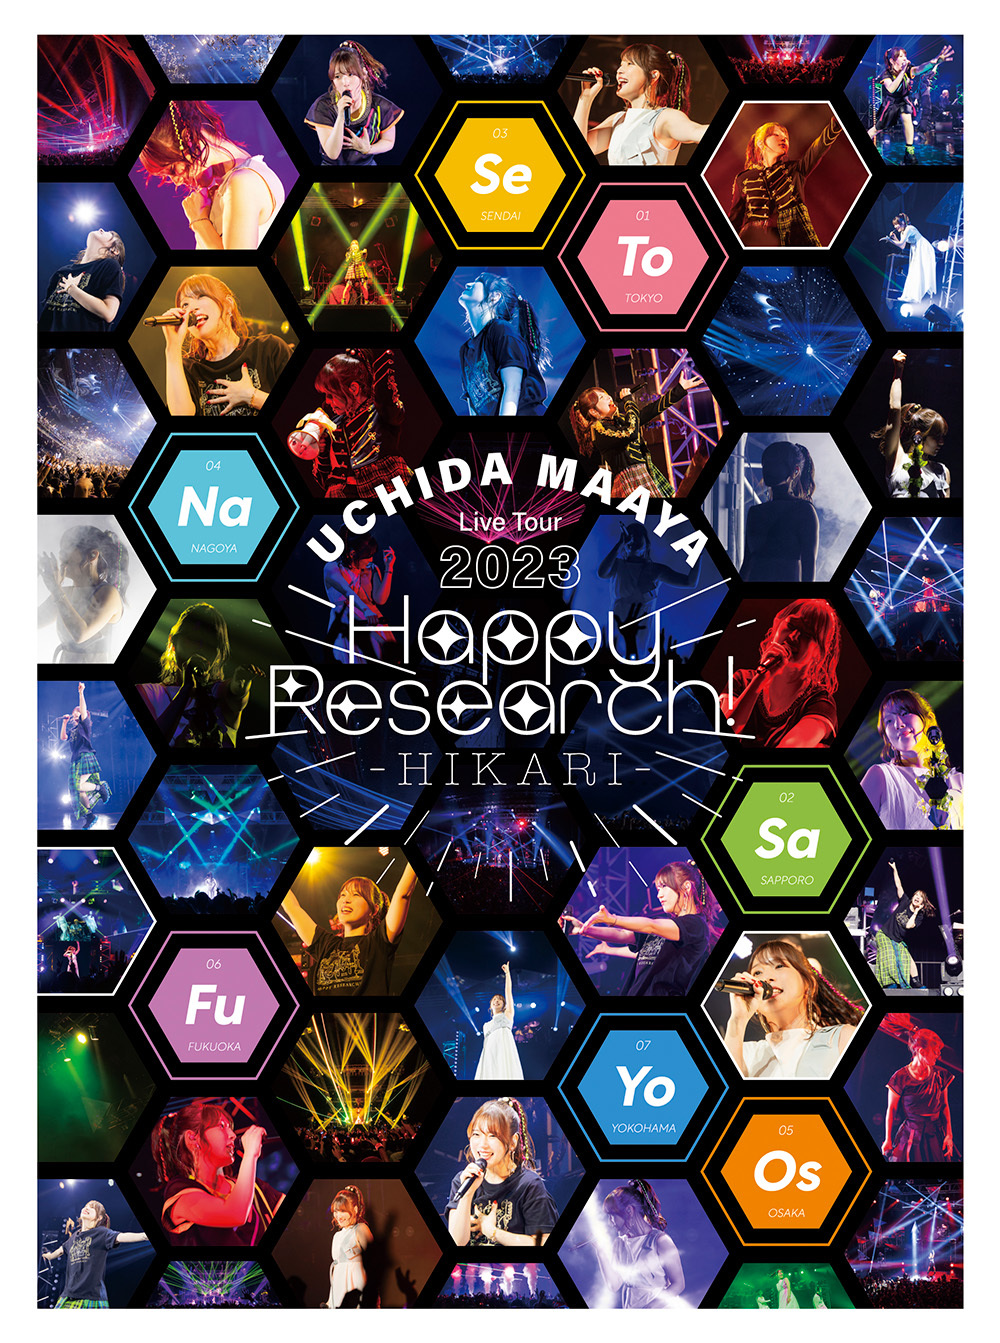 『UCHIDA MAAYA Live Tour 2023 Happy Research! -HIKARI- Blu-ray』